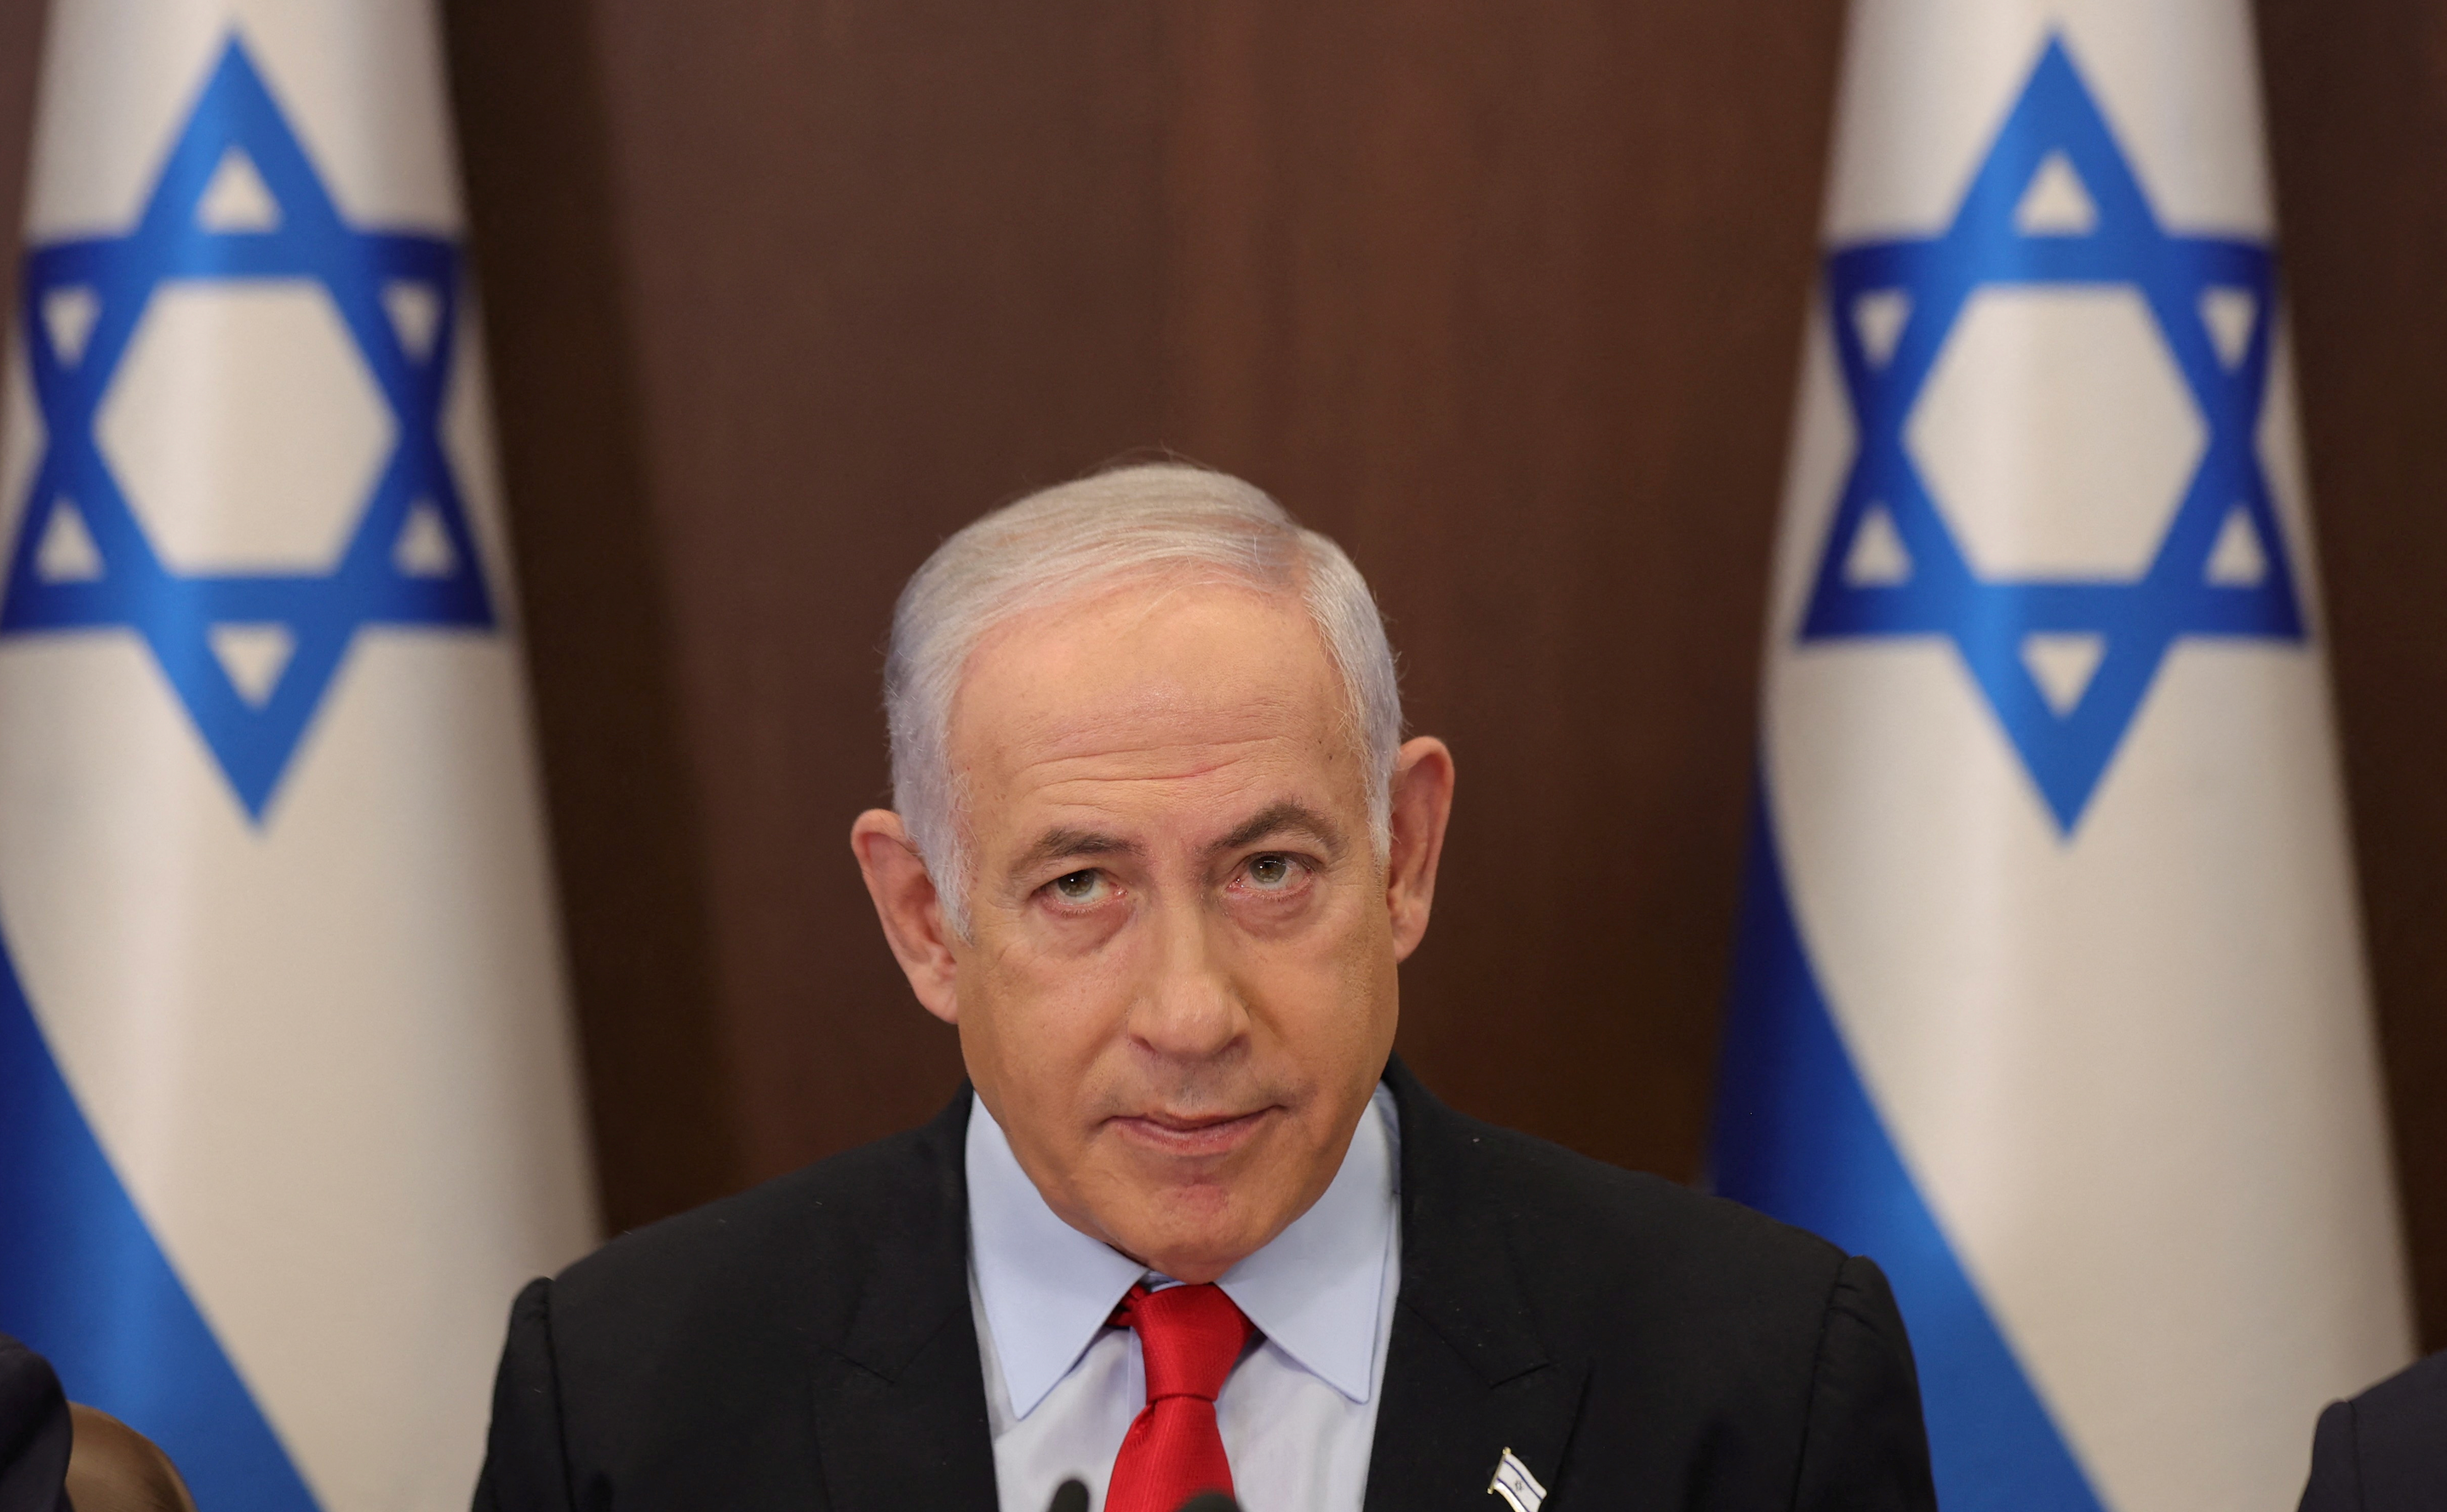 Netanyahu, Gantz agree to form emergency Israel government